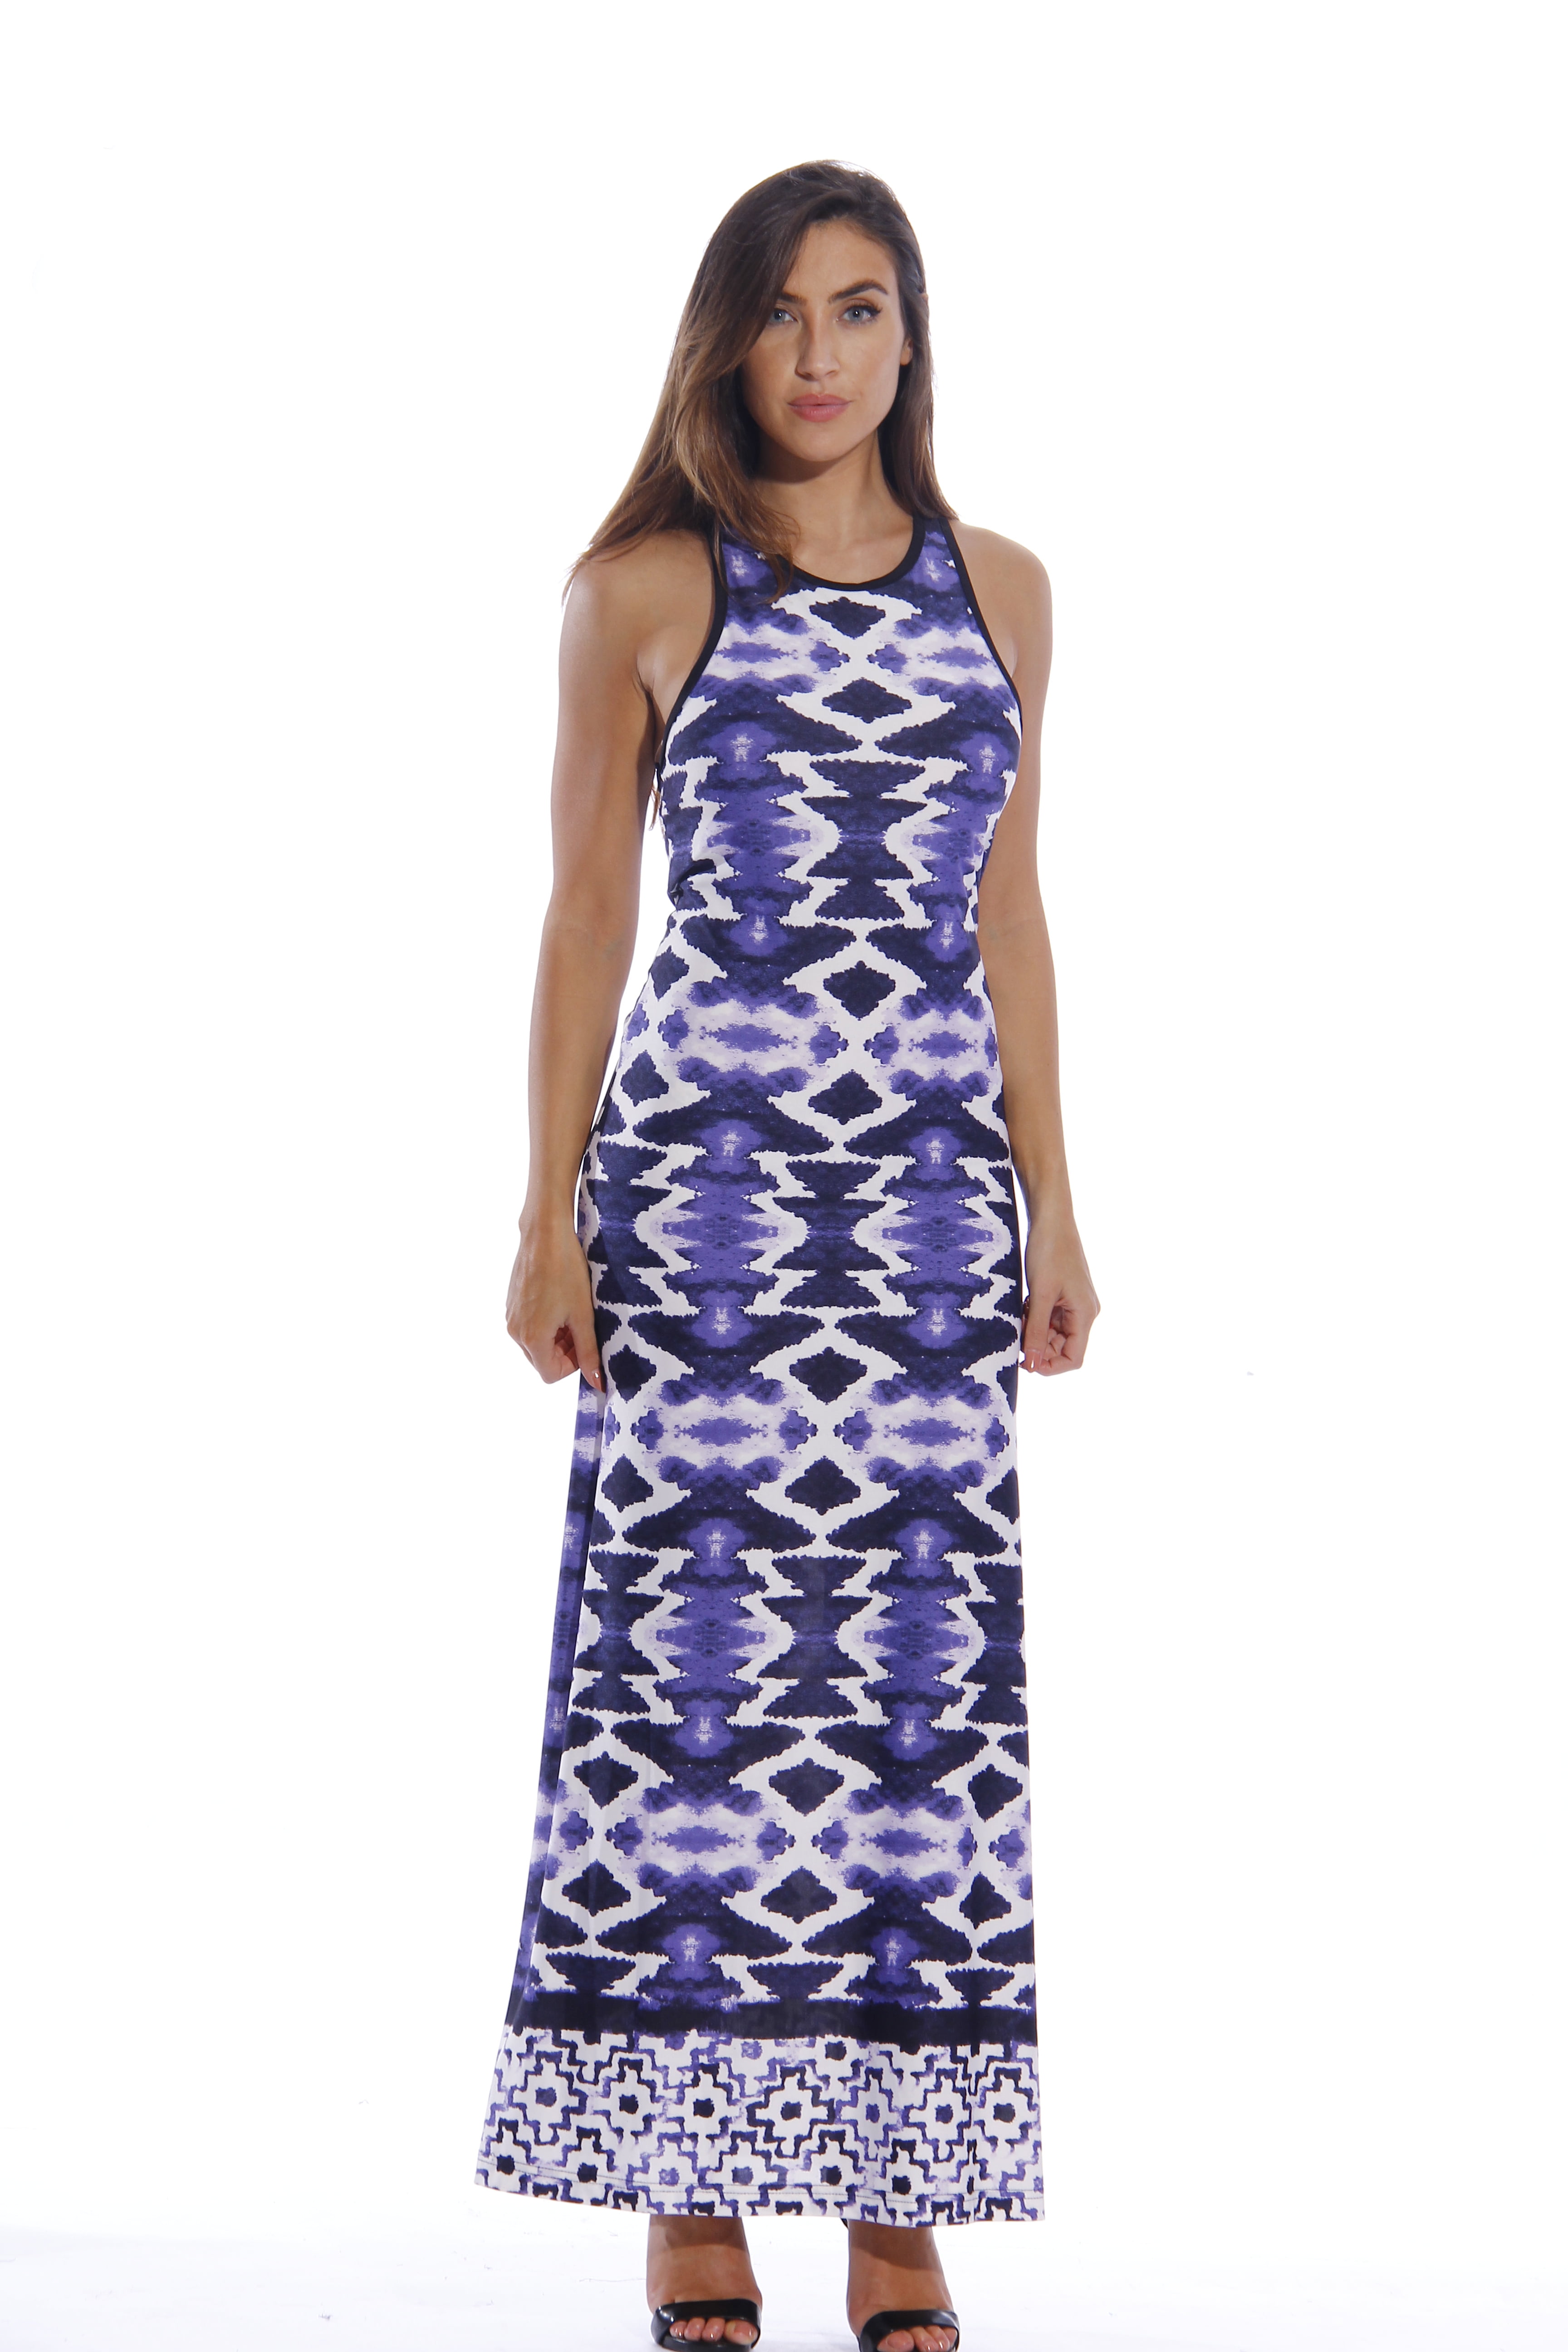 Just Love Maxi Dresses for Women / Summer Dresses (Blue Aztec Tie Dye ...